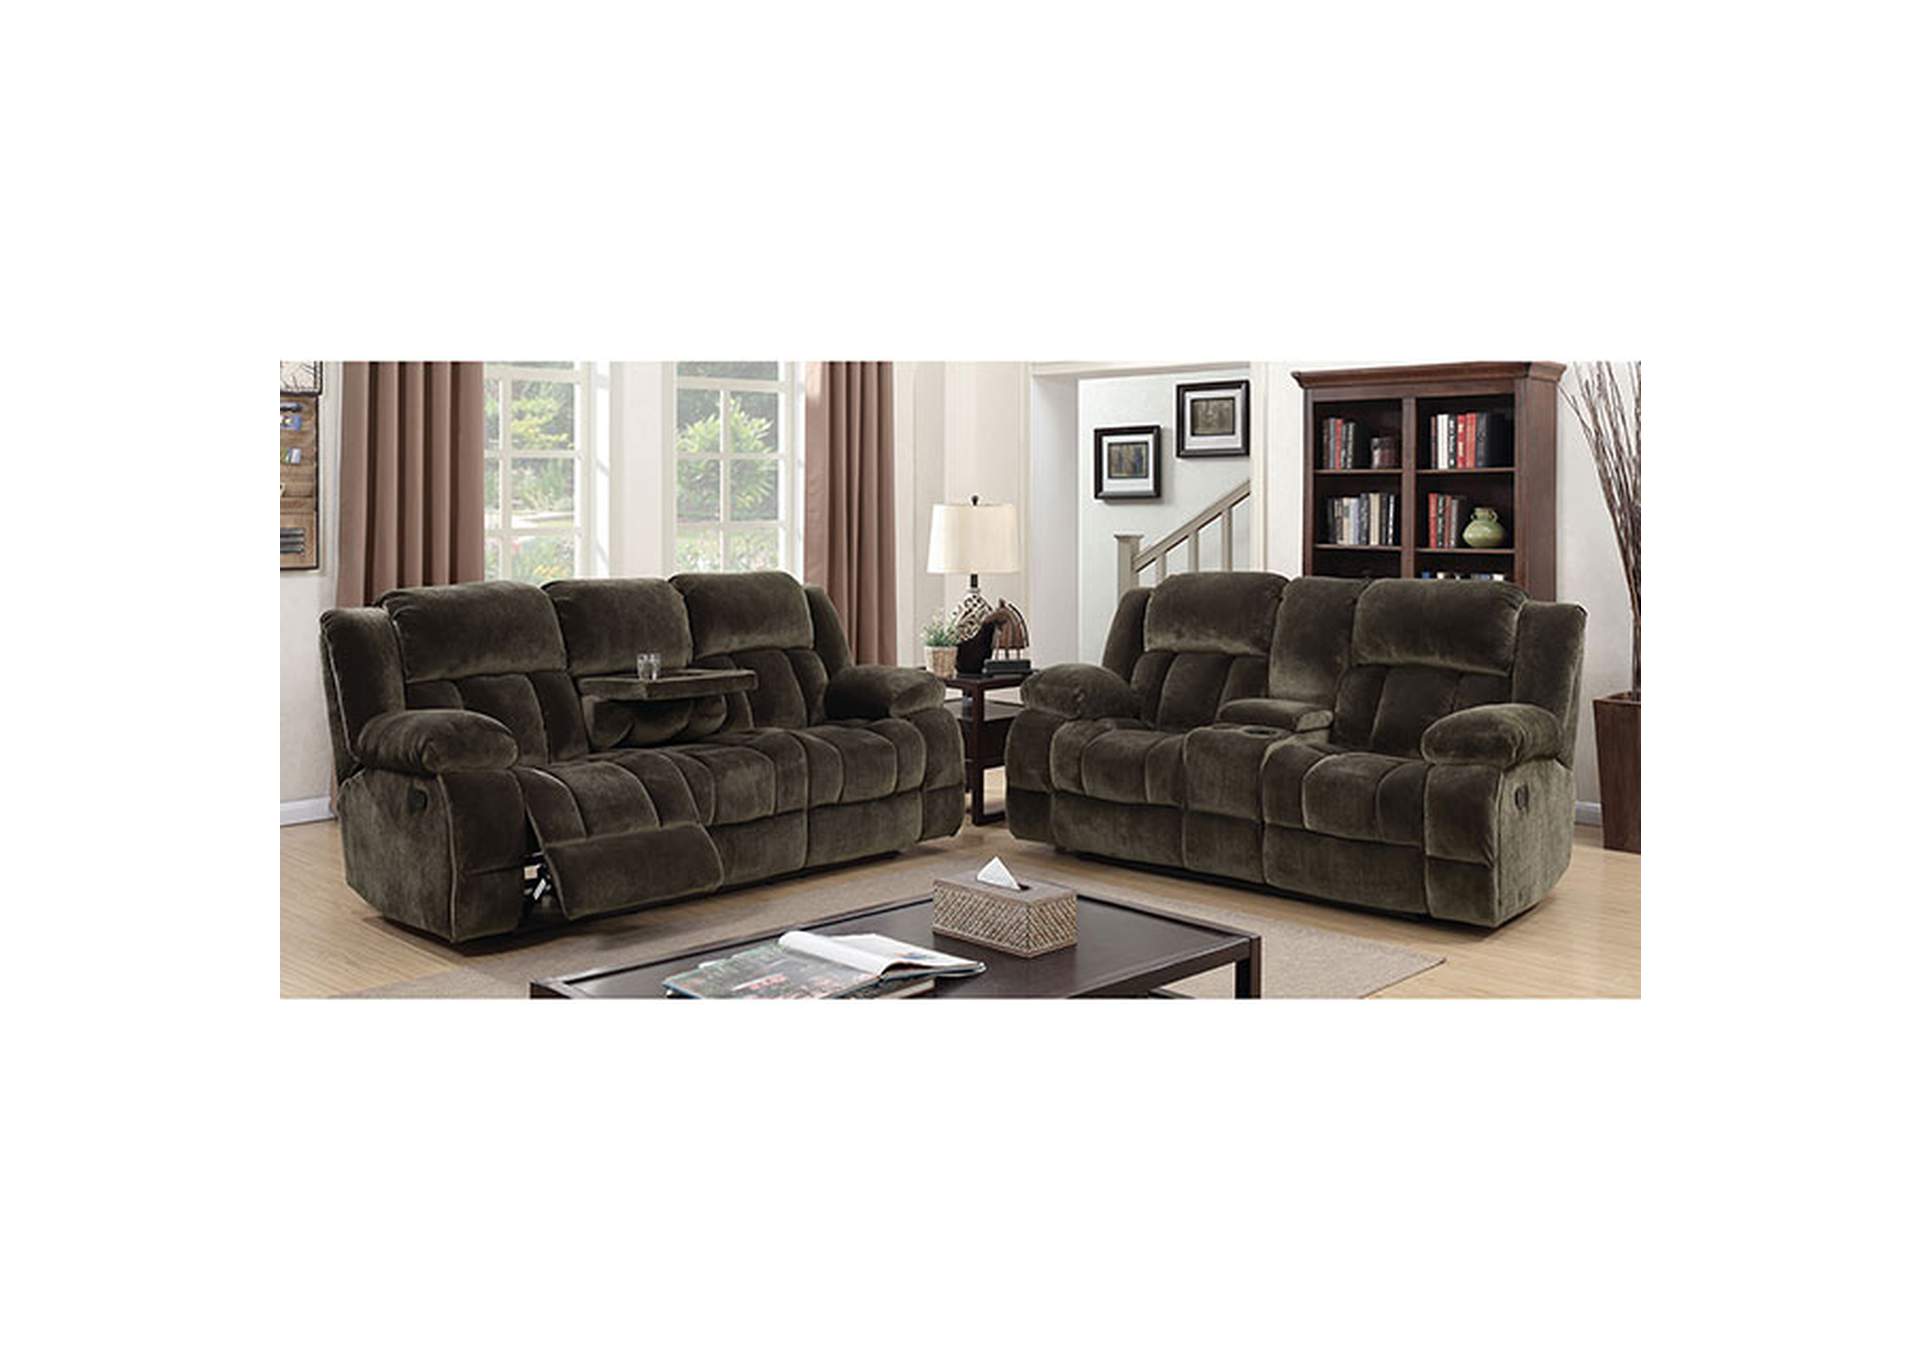 Sadhbh Sofa,Furniture of America